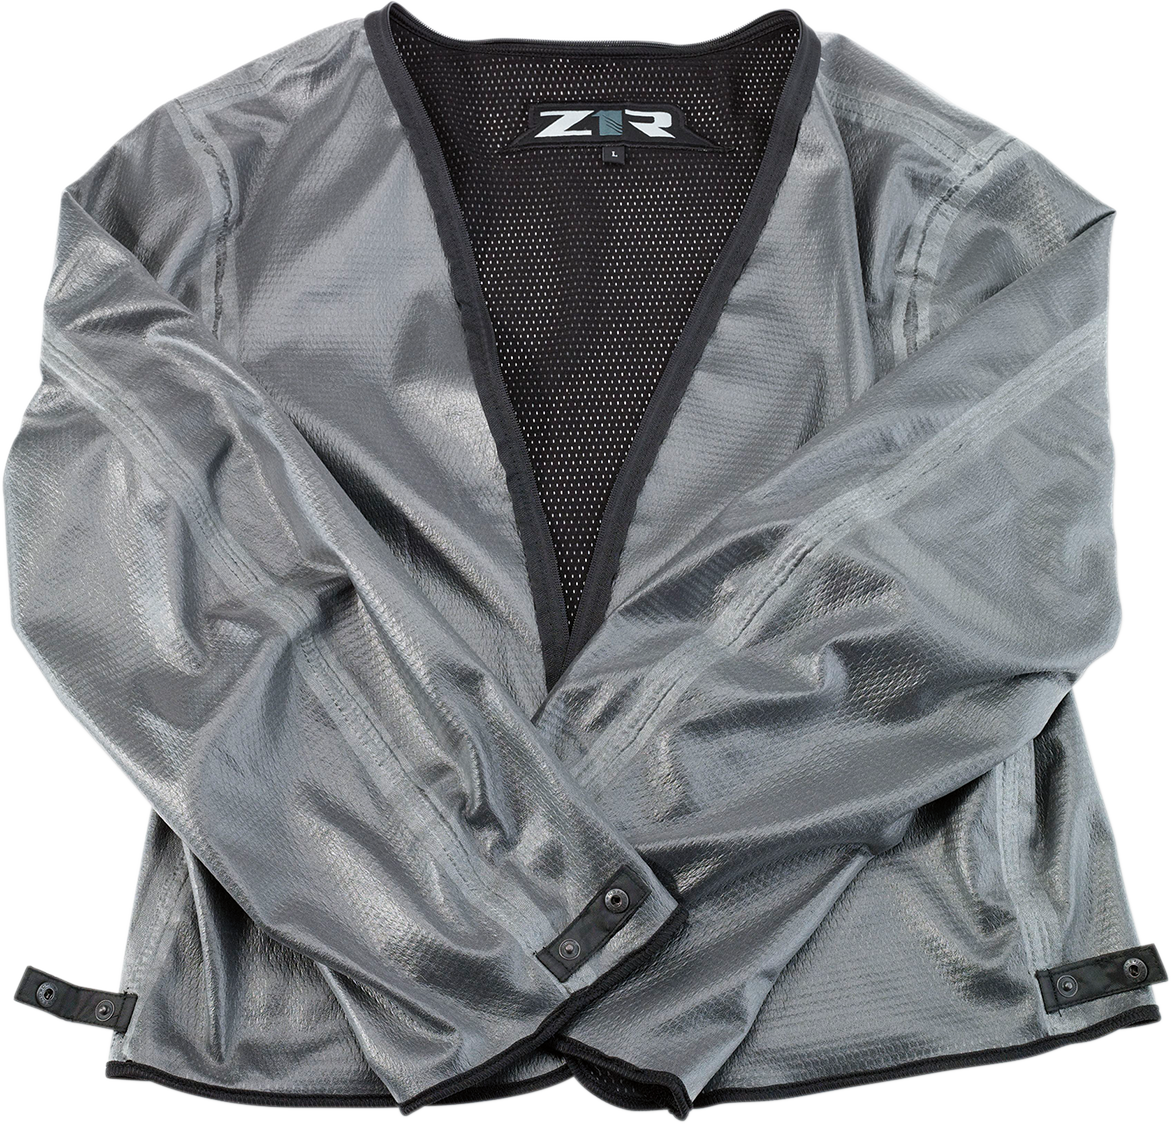 Z1R Gust Mesh Waterproof Jacket - Black - XL 2820-4944